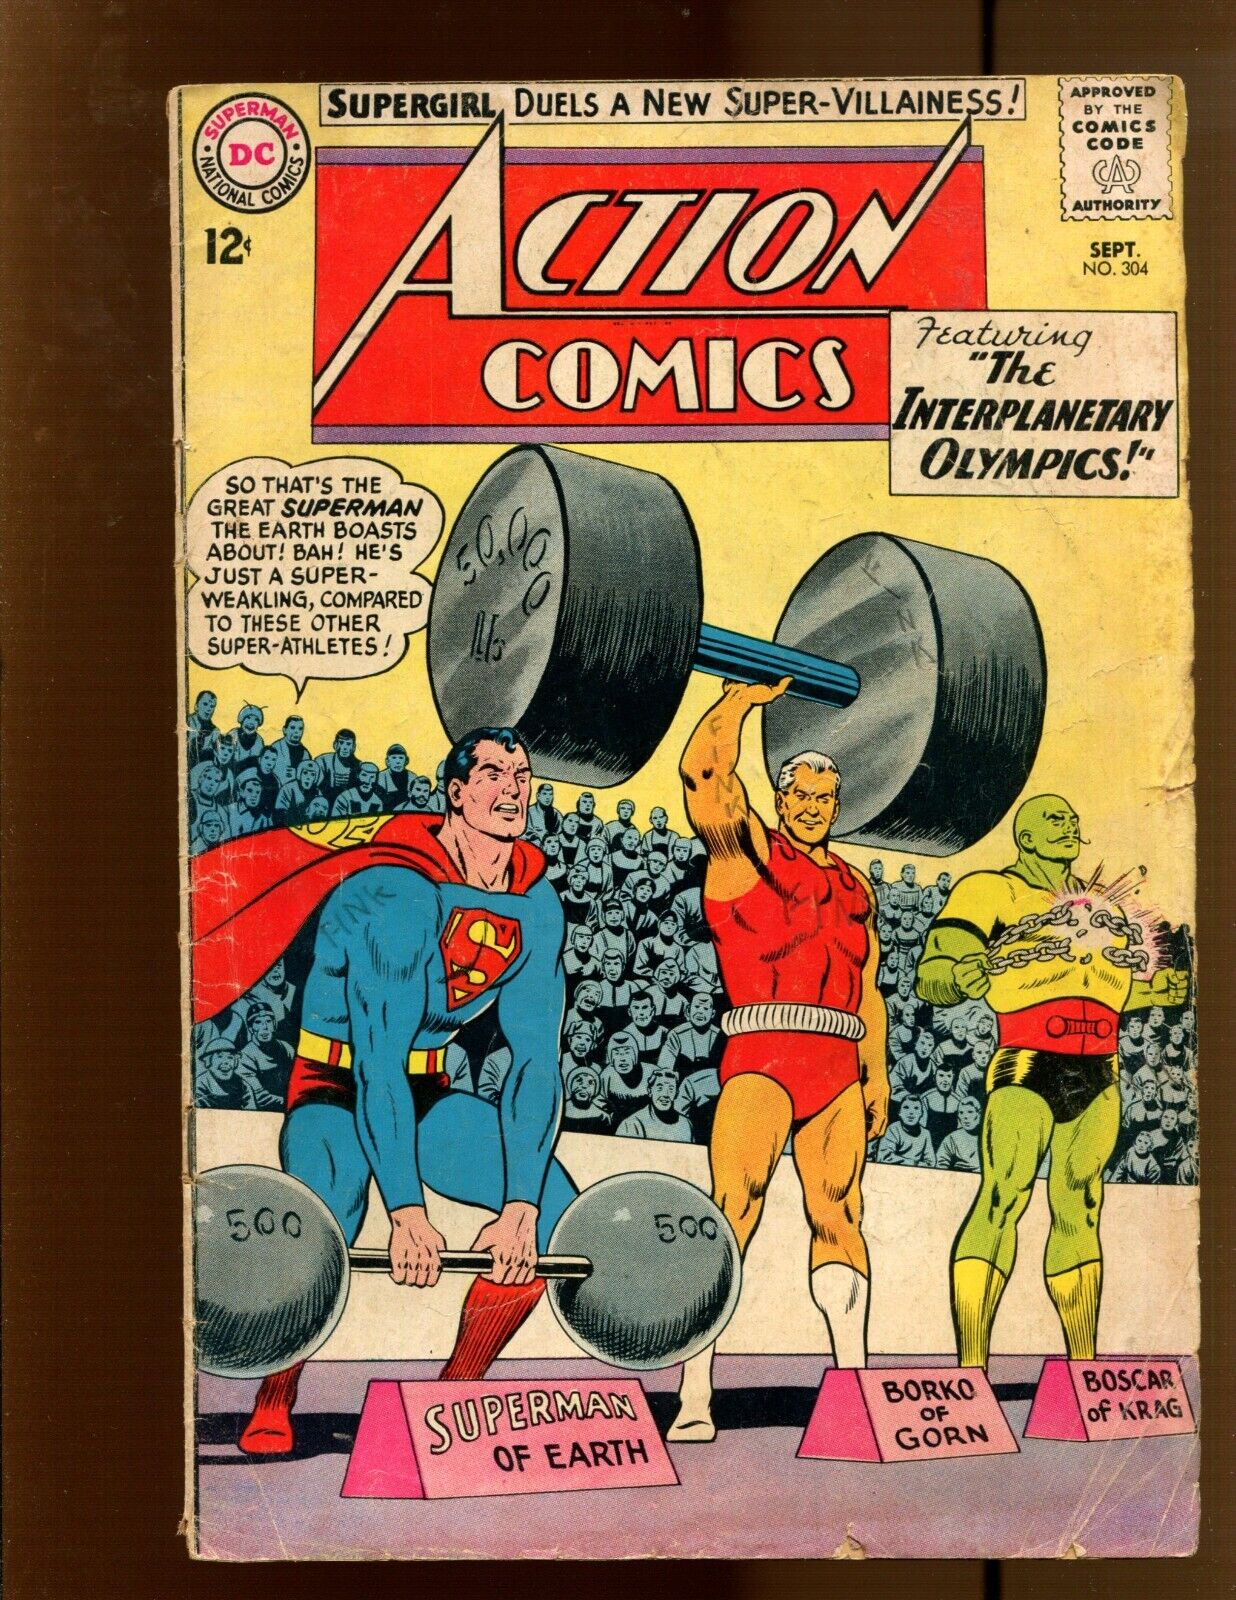 Action Comics #304 - The Interplanetary Olympics (1.8) 1963